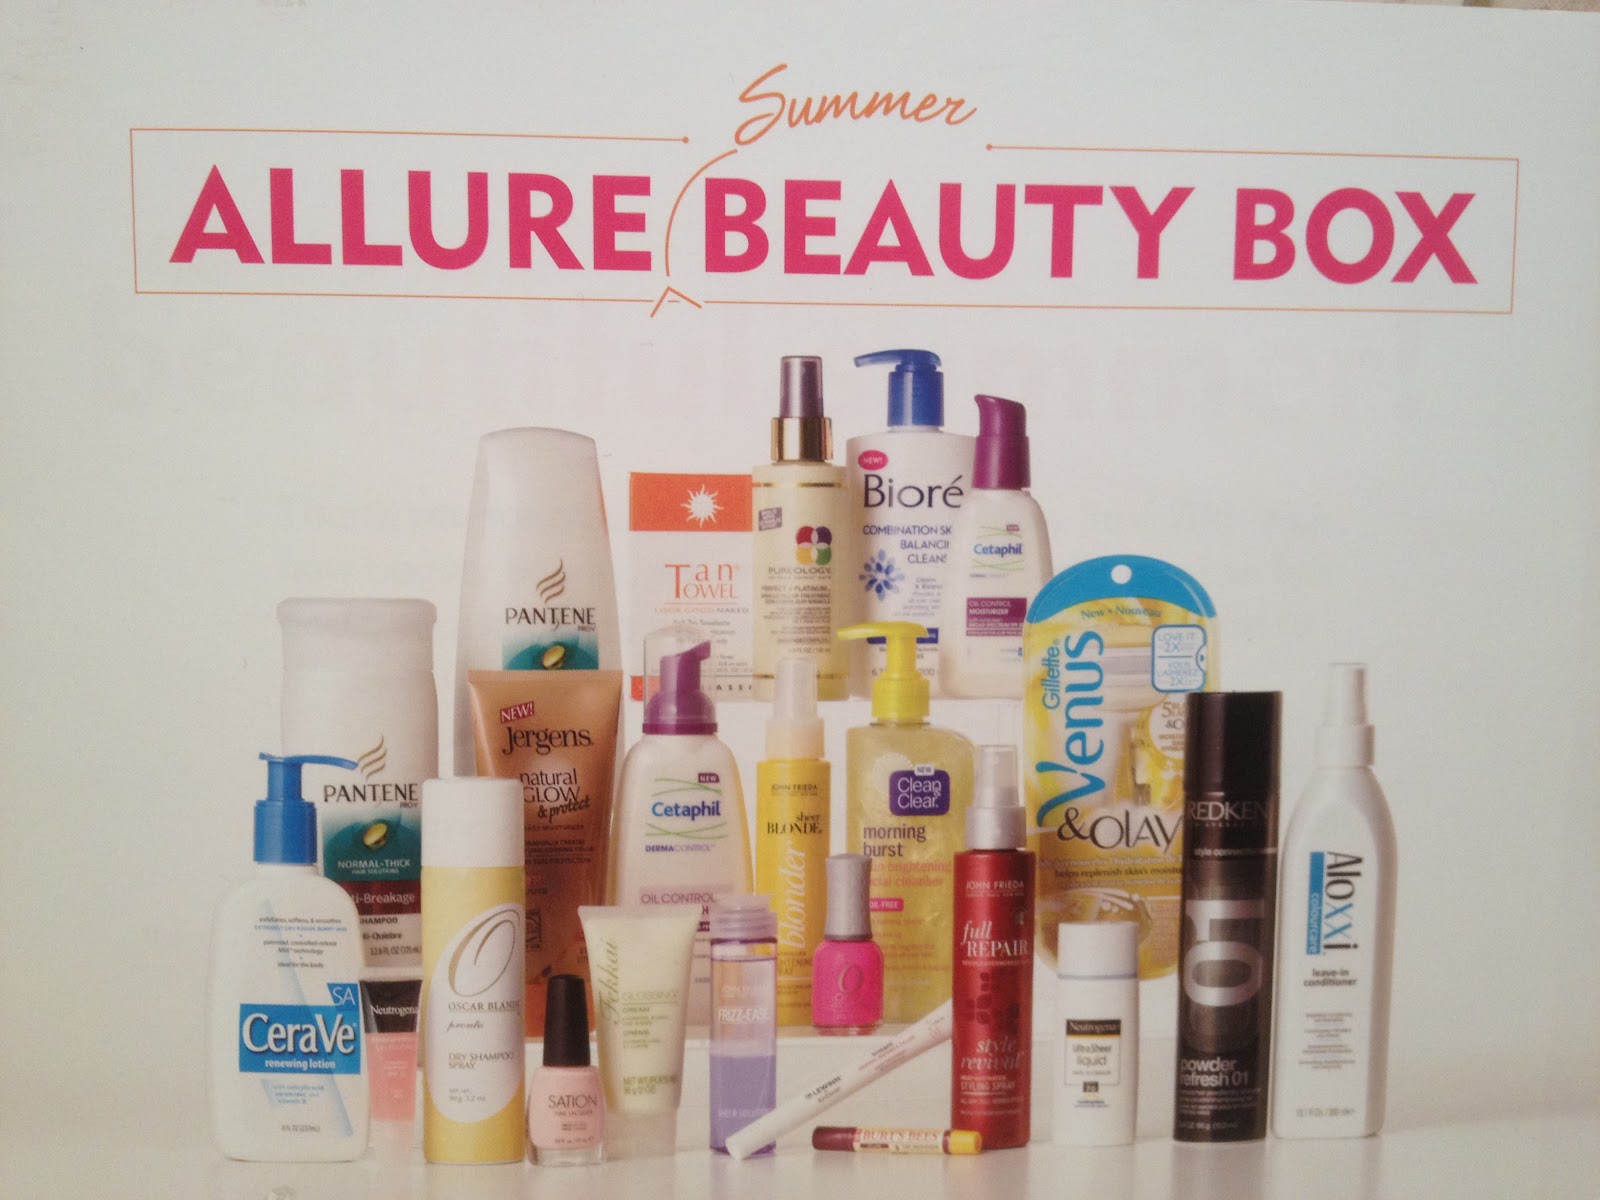 Booyah Beauty: Allure Summer Beauty Box 2012